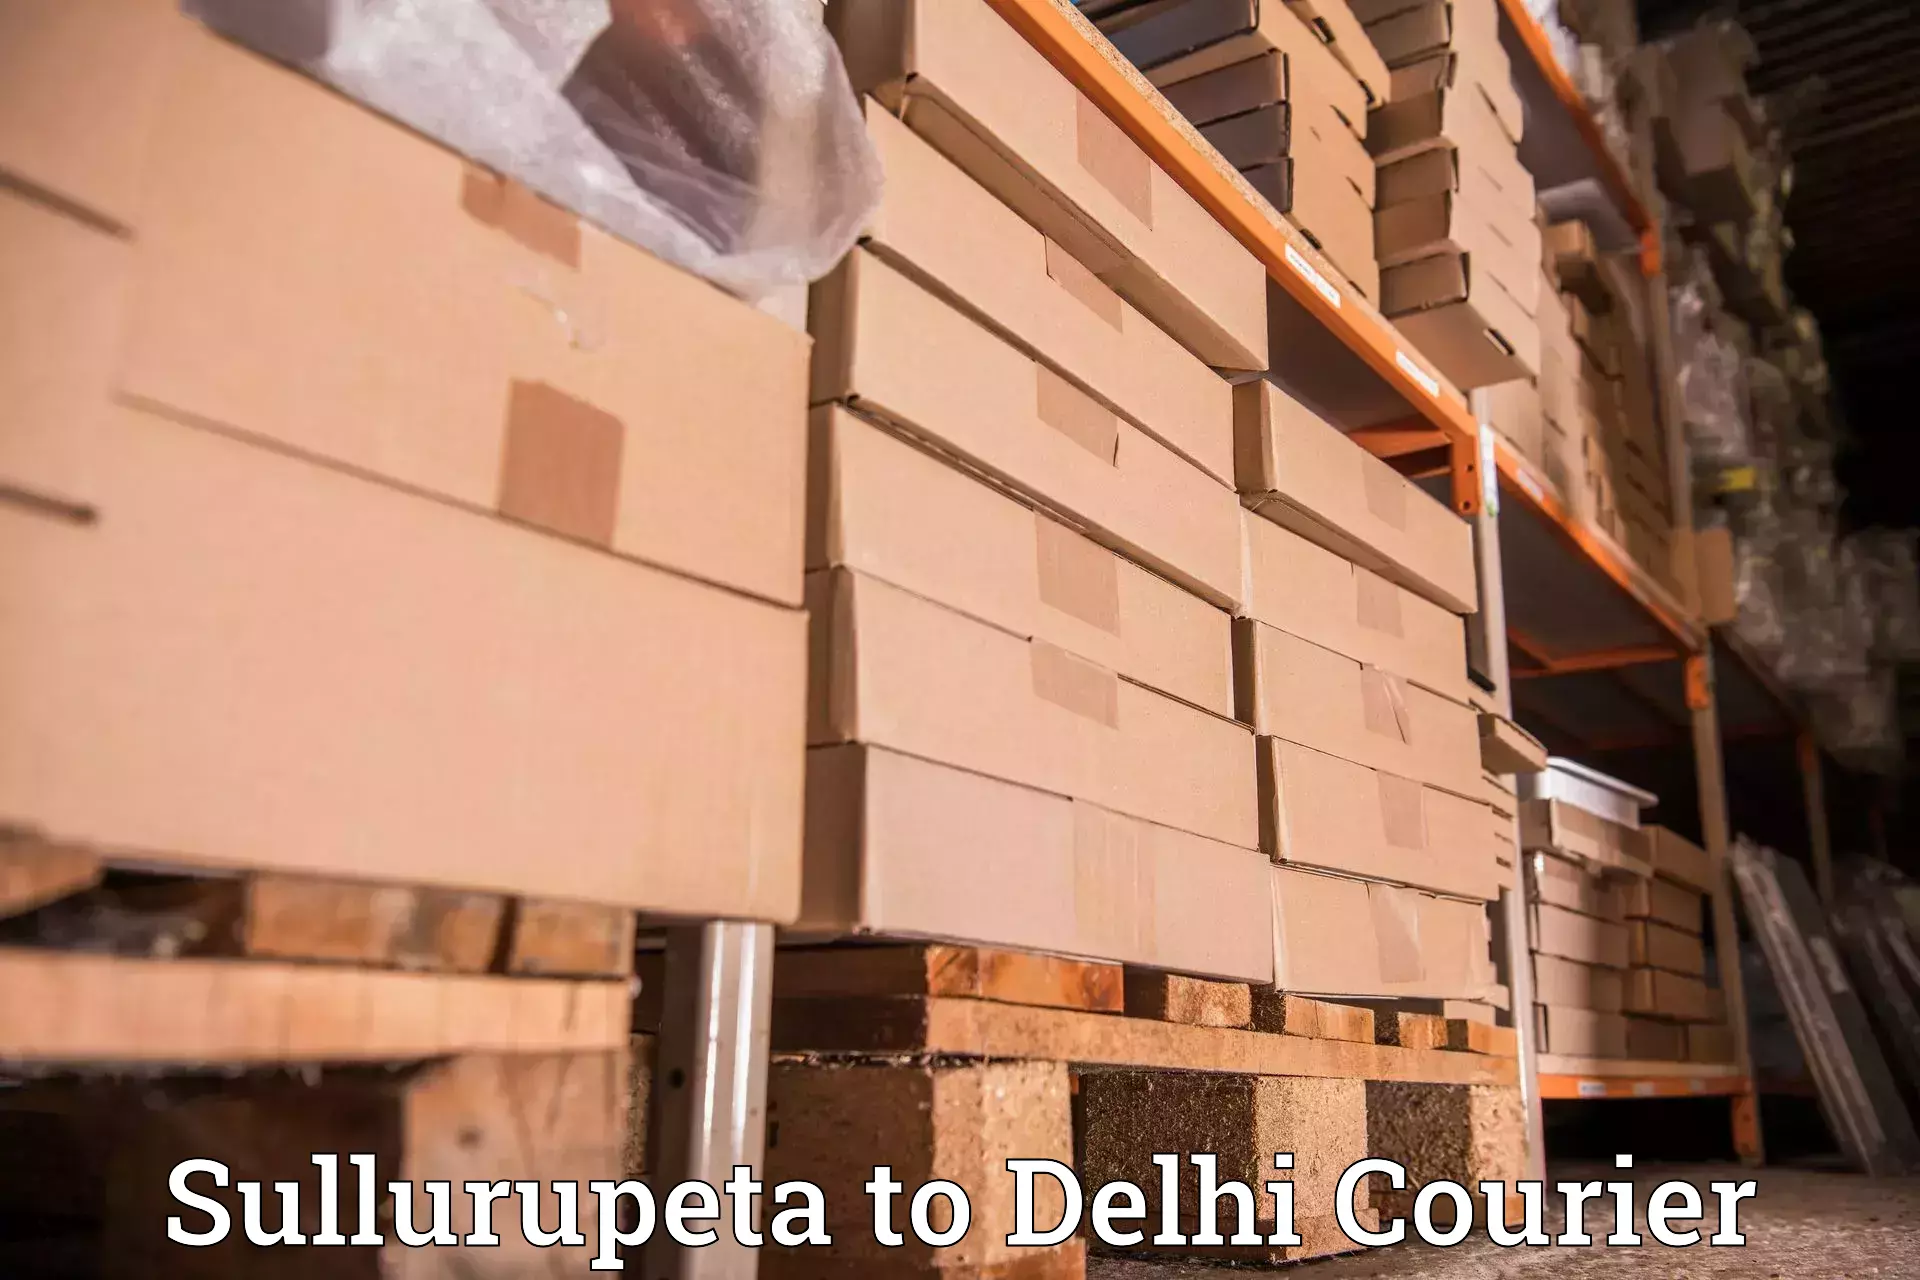 Courier service partnerships Sullurupeta to Delhi